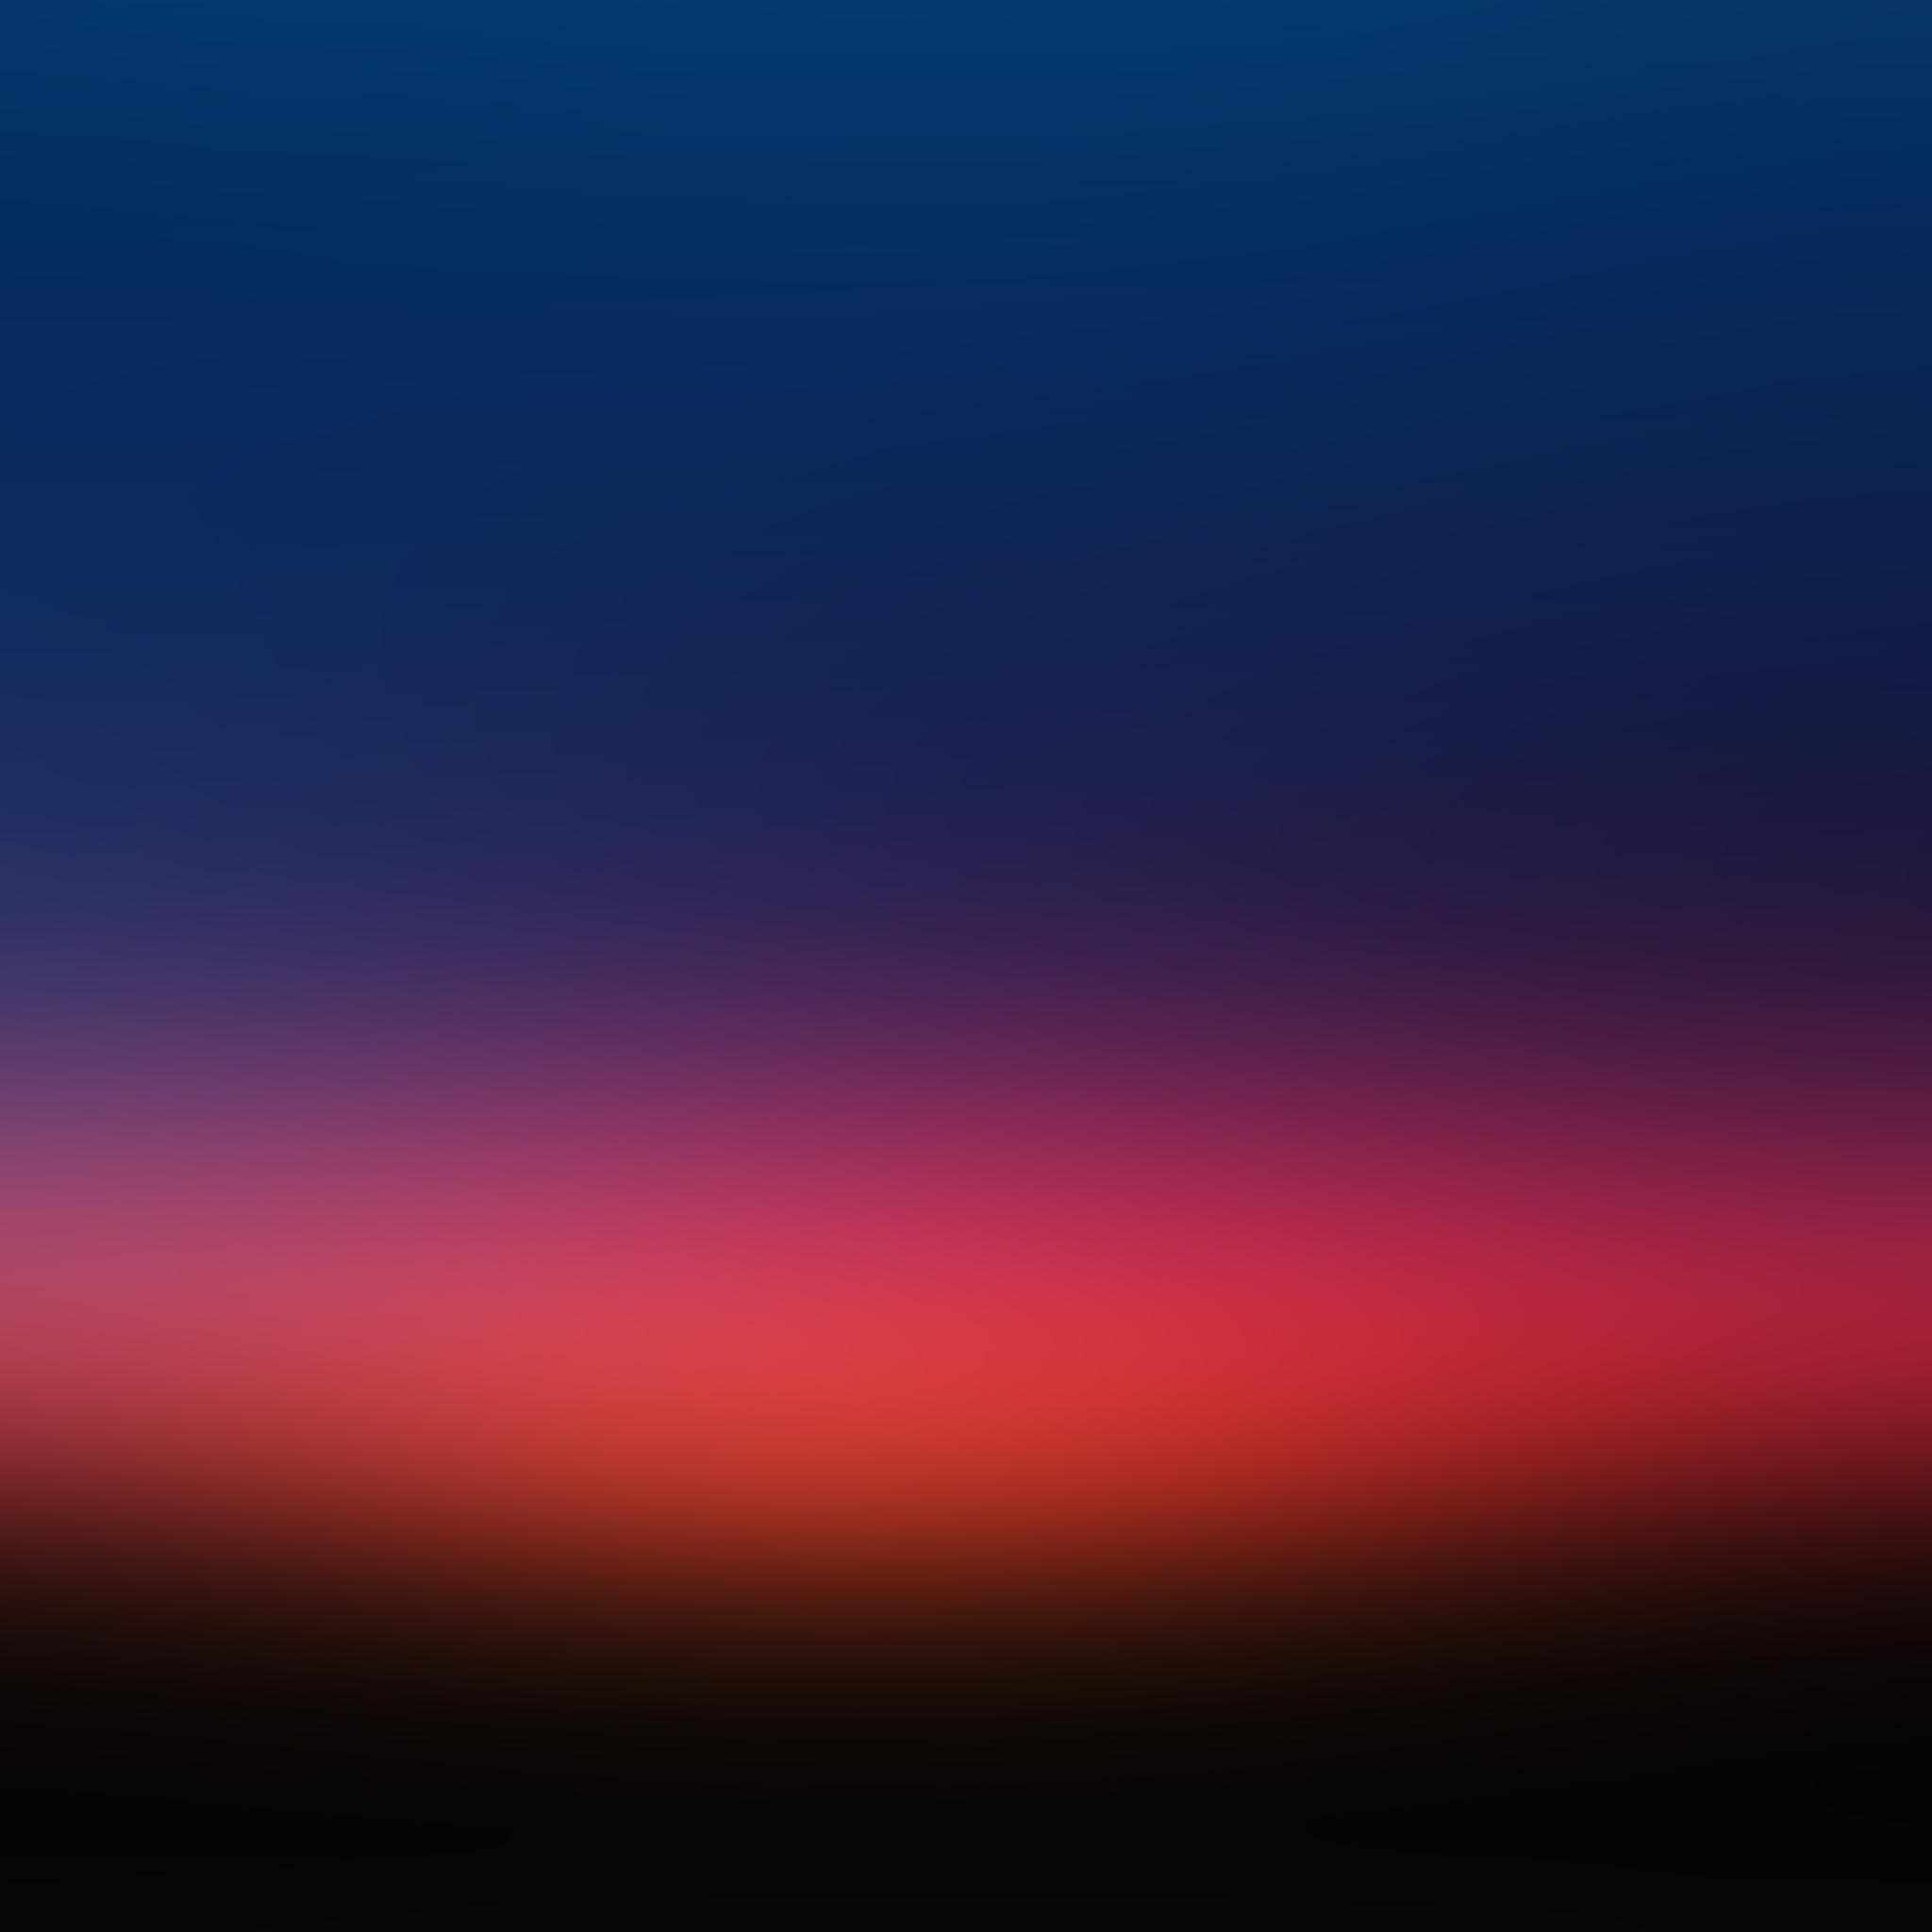 Morning Light Red Blue Blur Gradation iPad Air Wallpaper Free